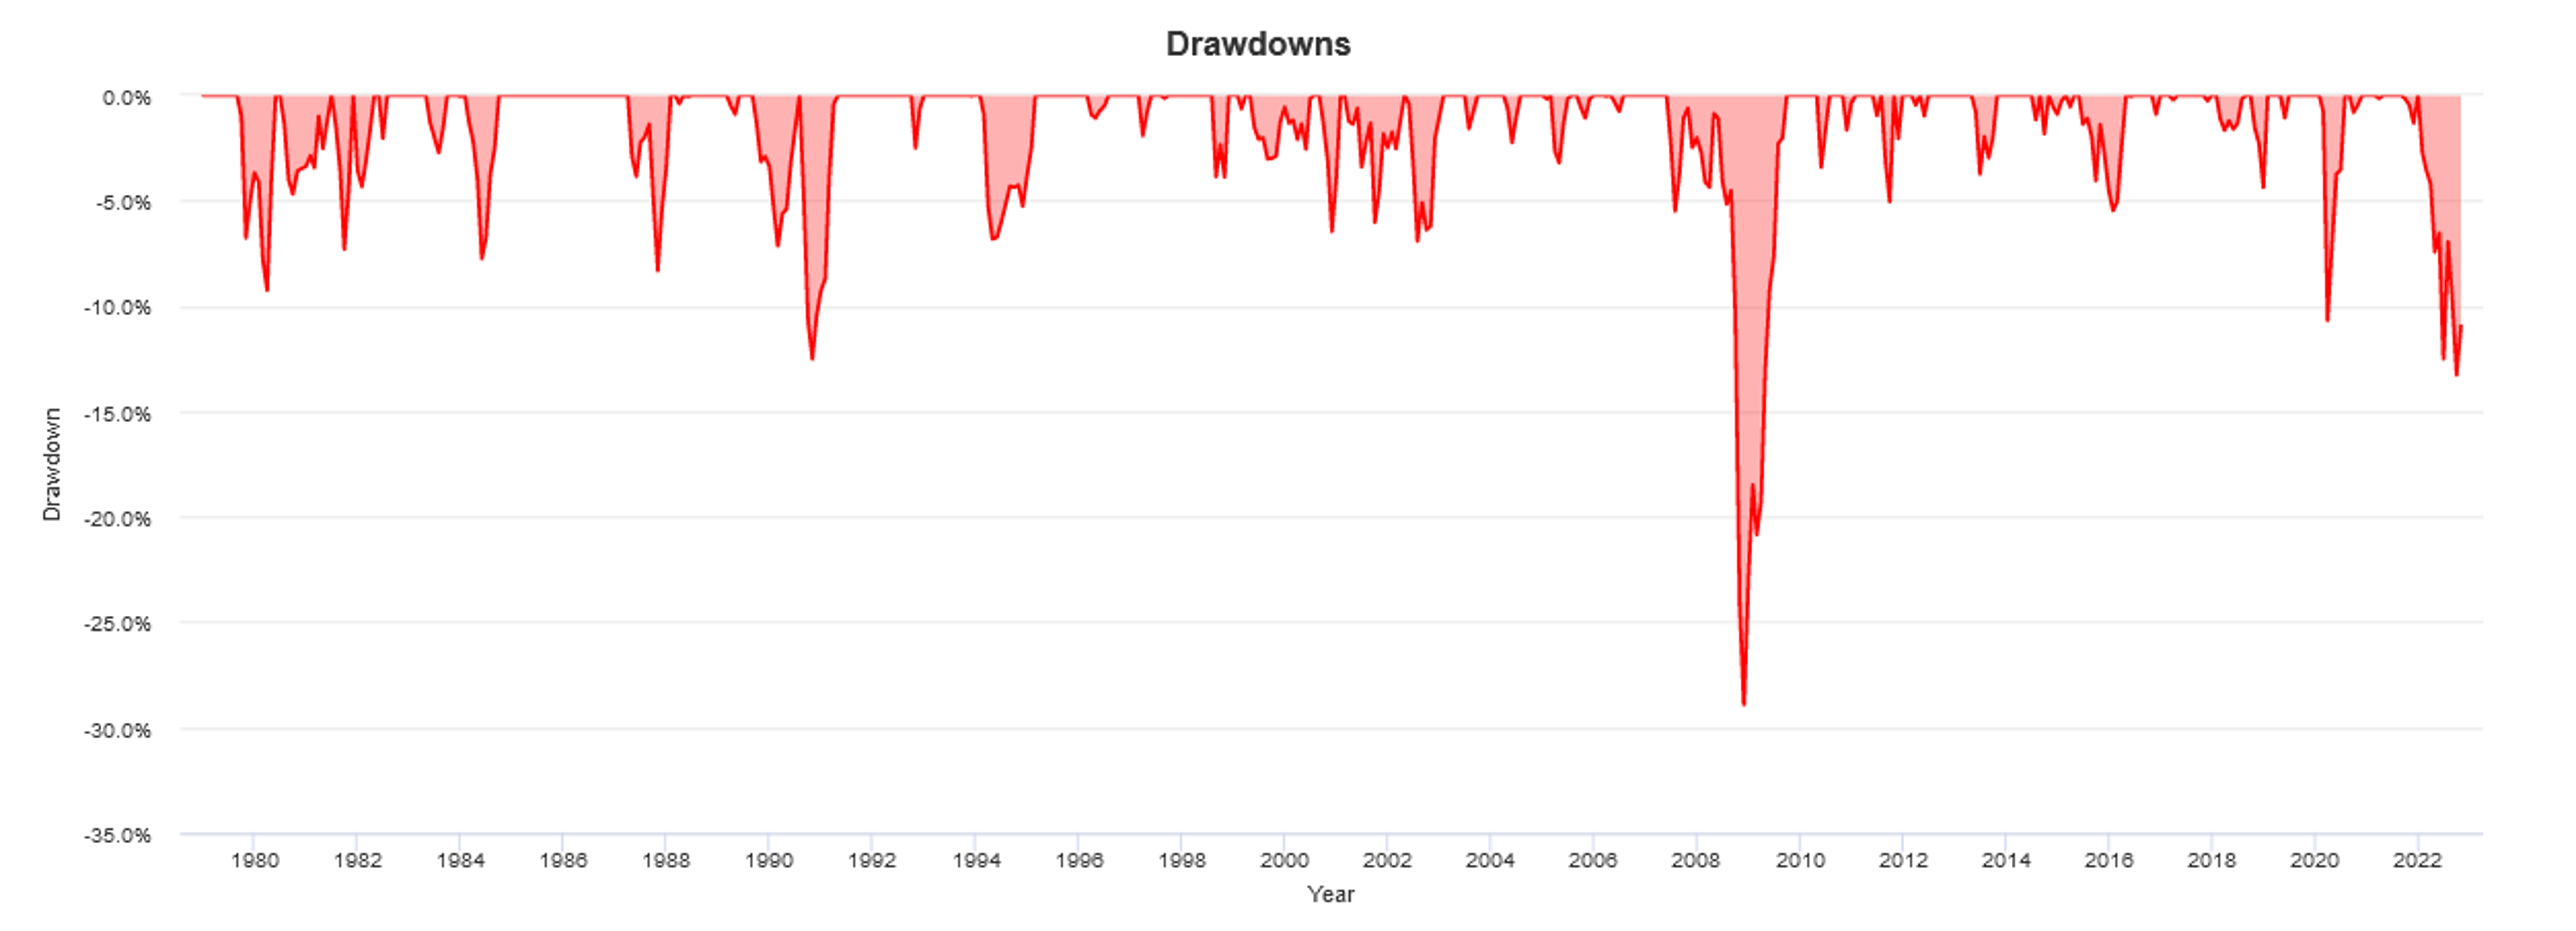 bond drawdowns